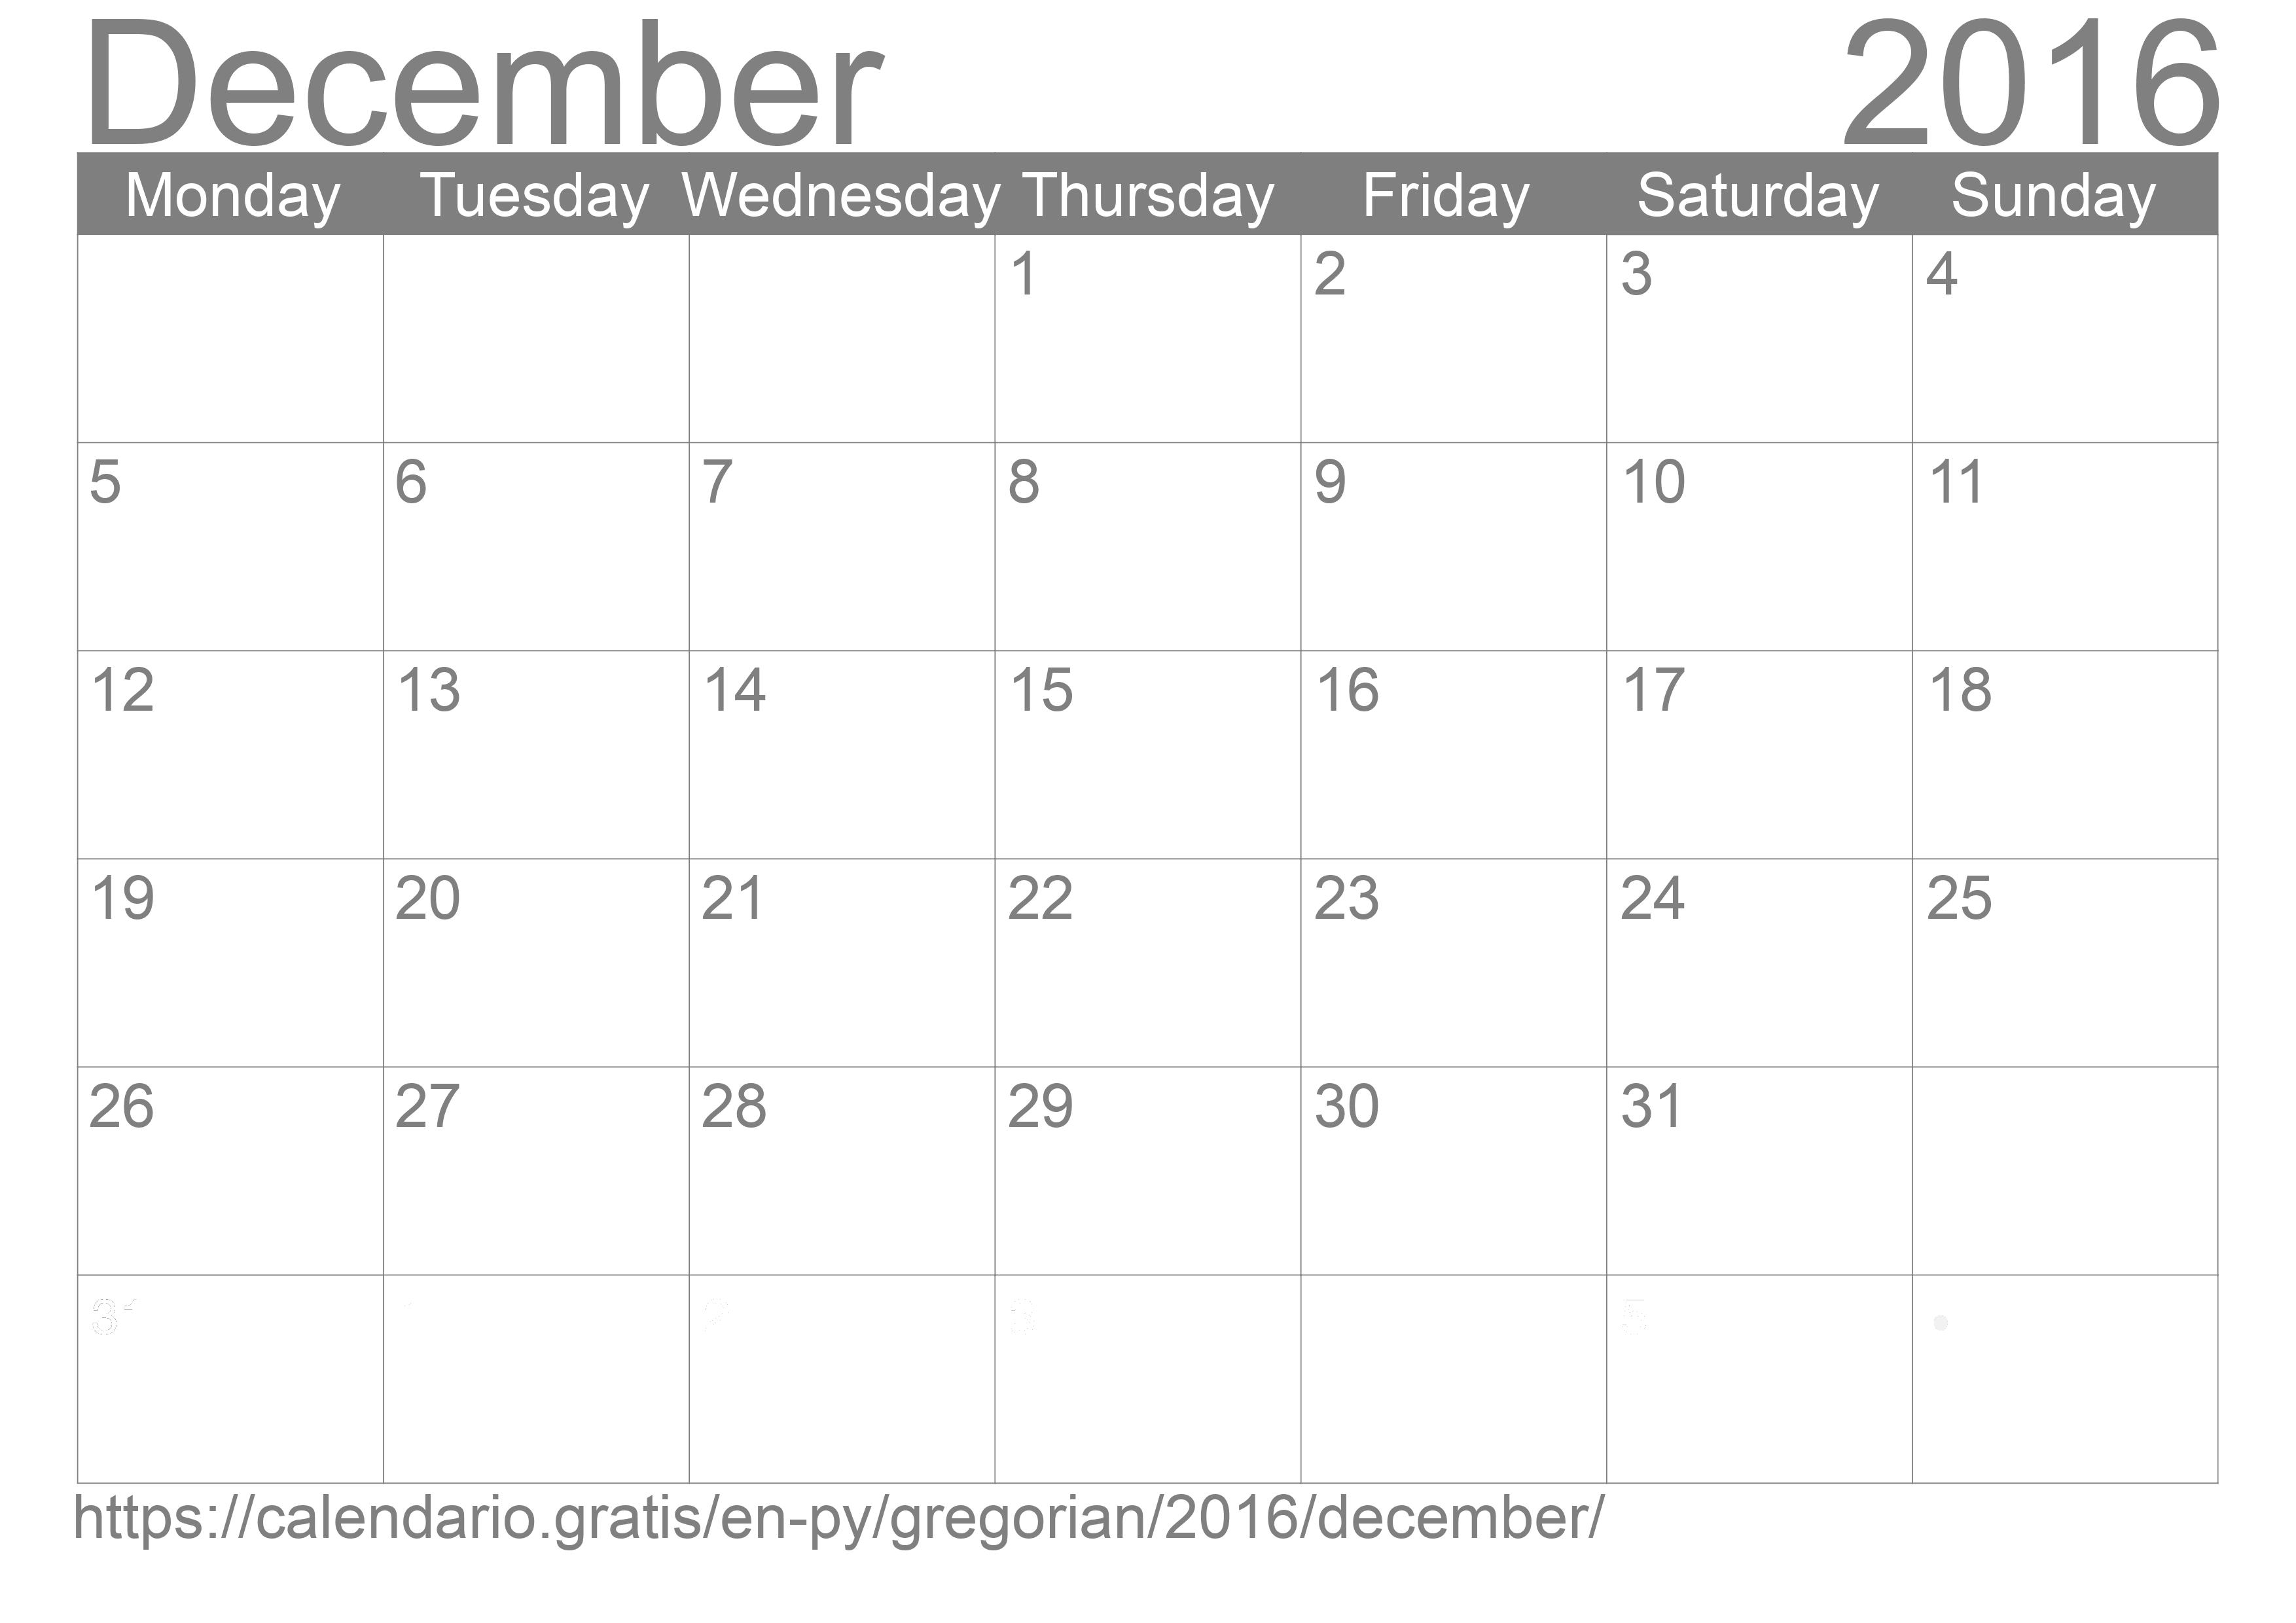 Calendar December 2016 to print